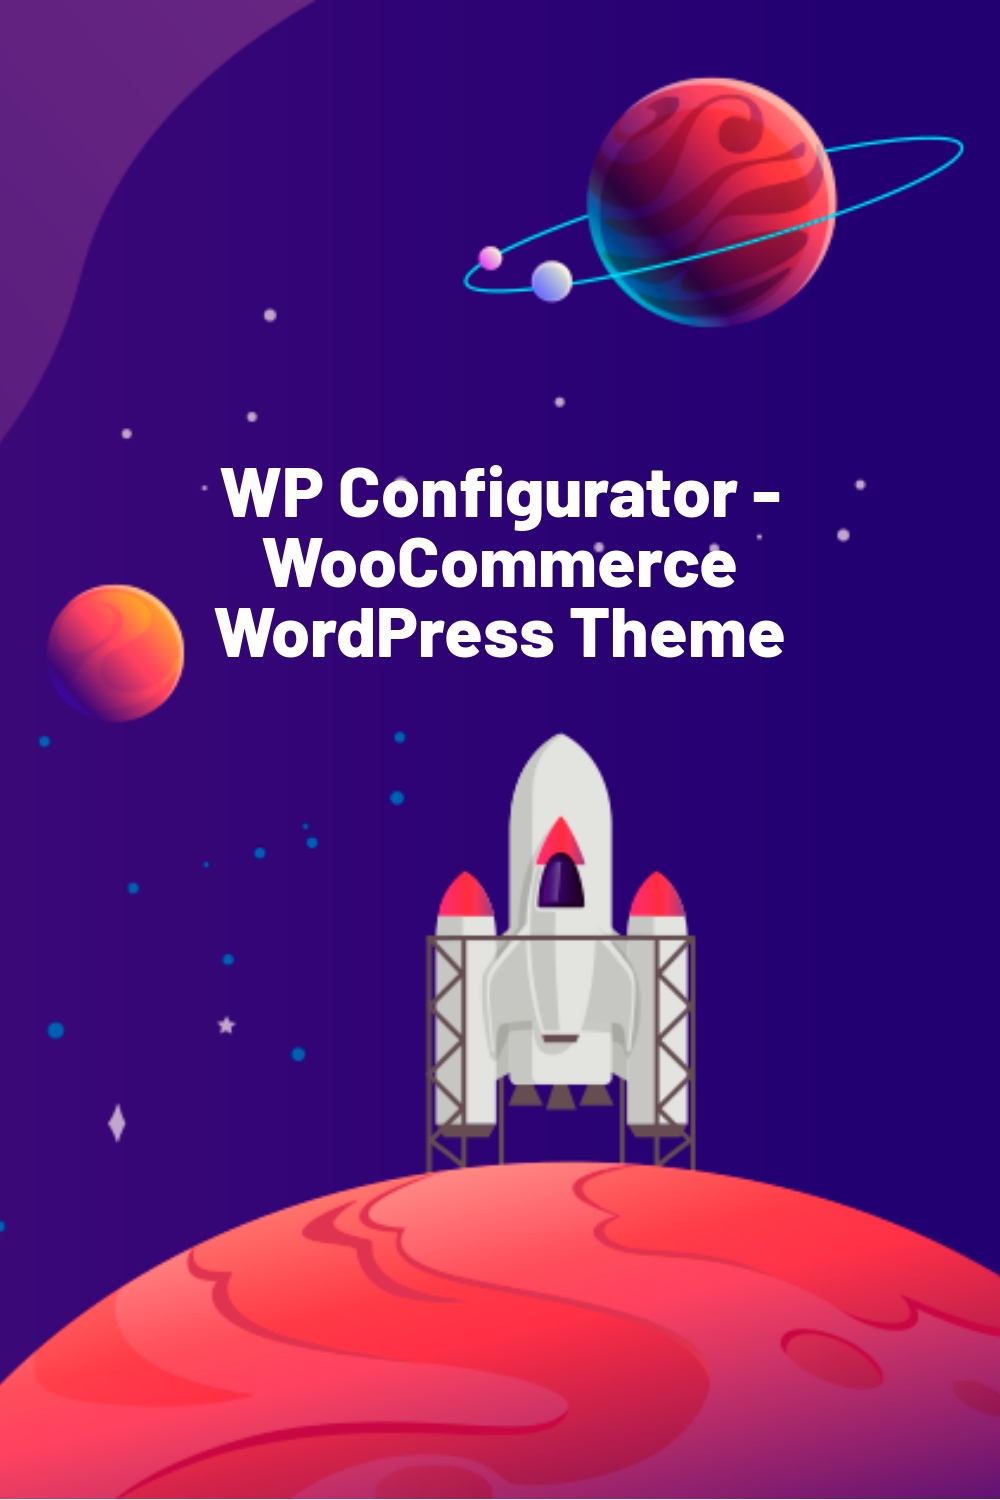 WP Configurator – WooCommerce WordPress Theme